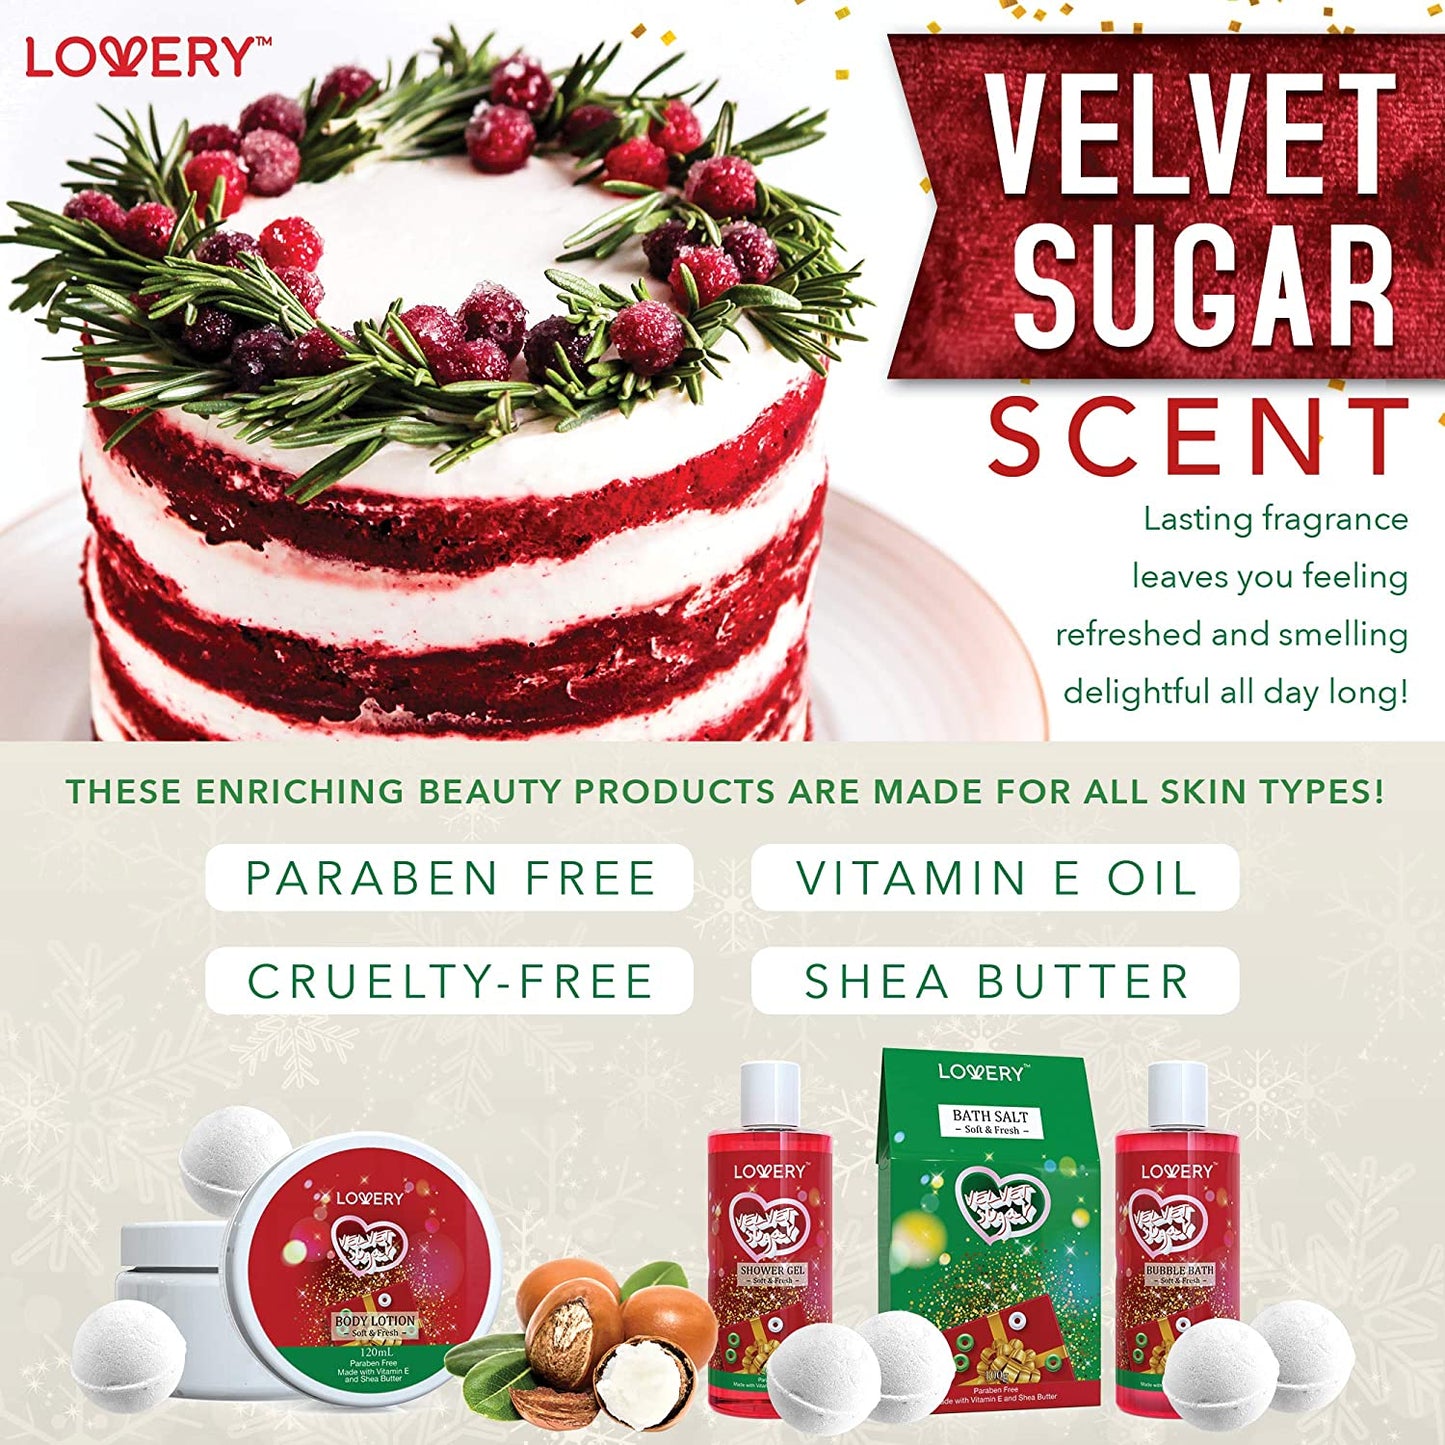 Velvet Sugar Gift Set - 10Pc Bath and Body Care